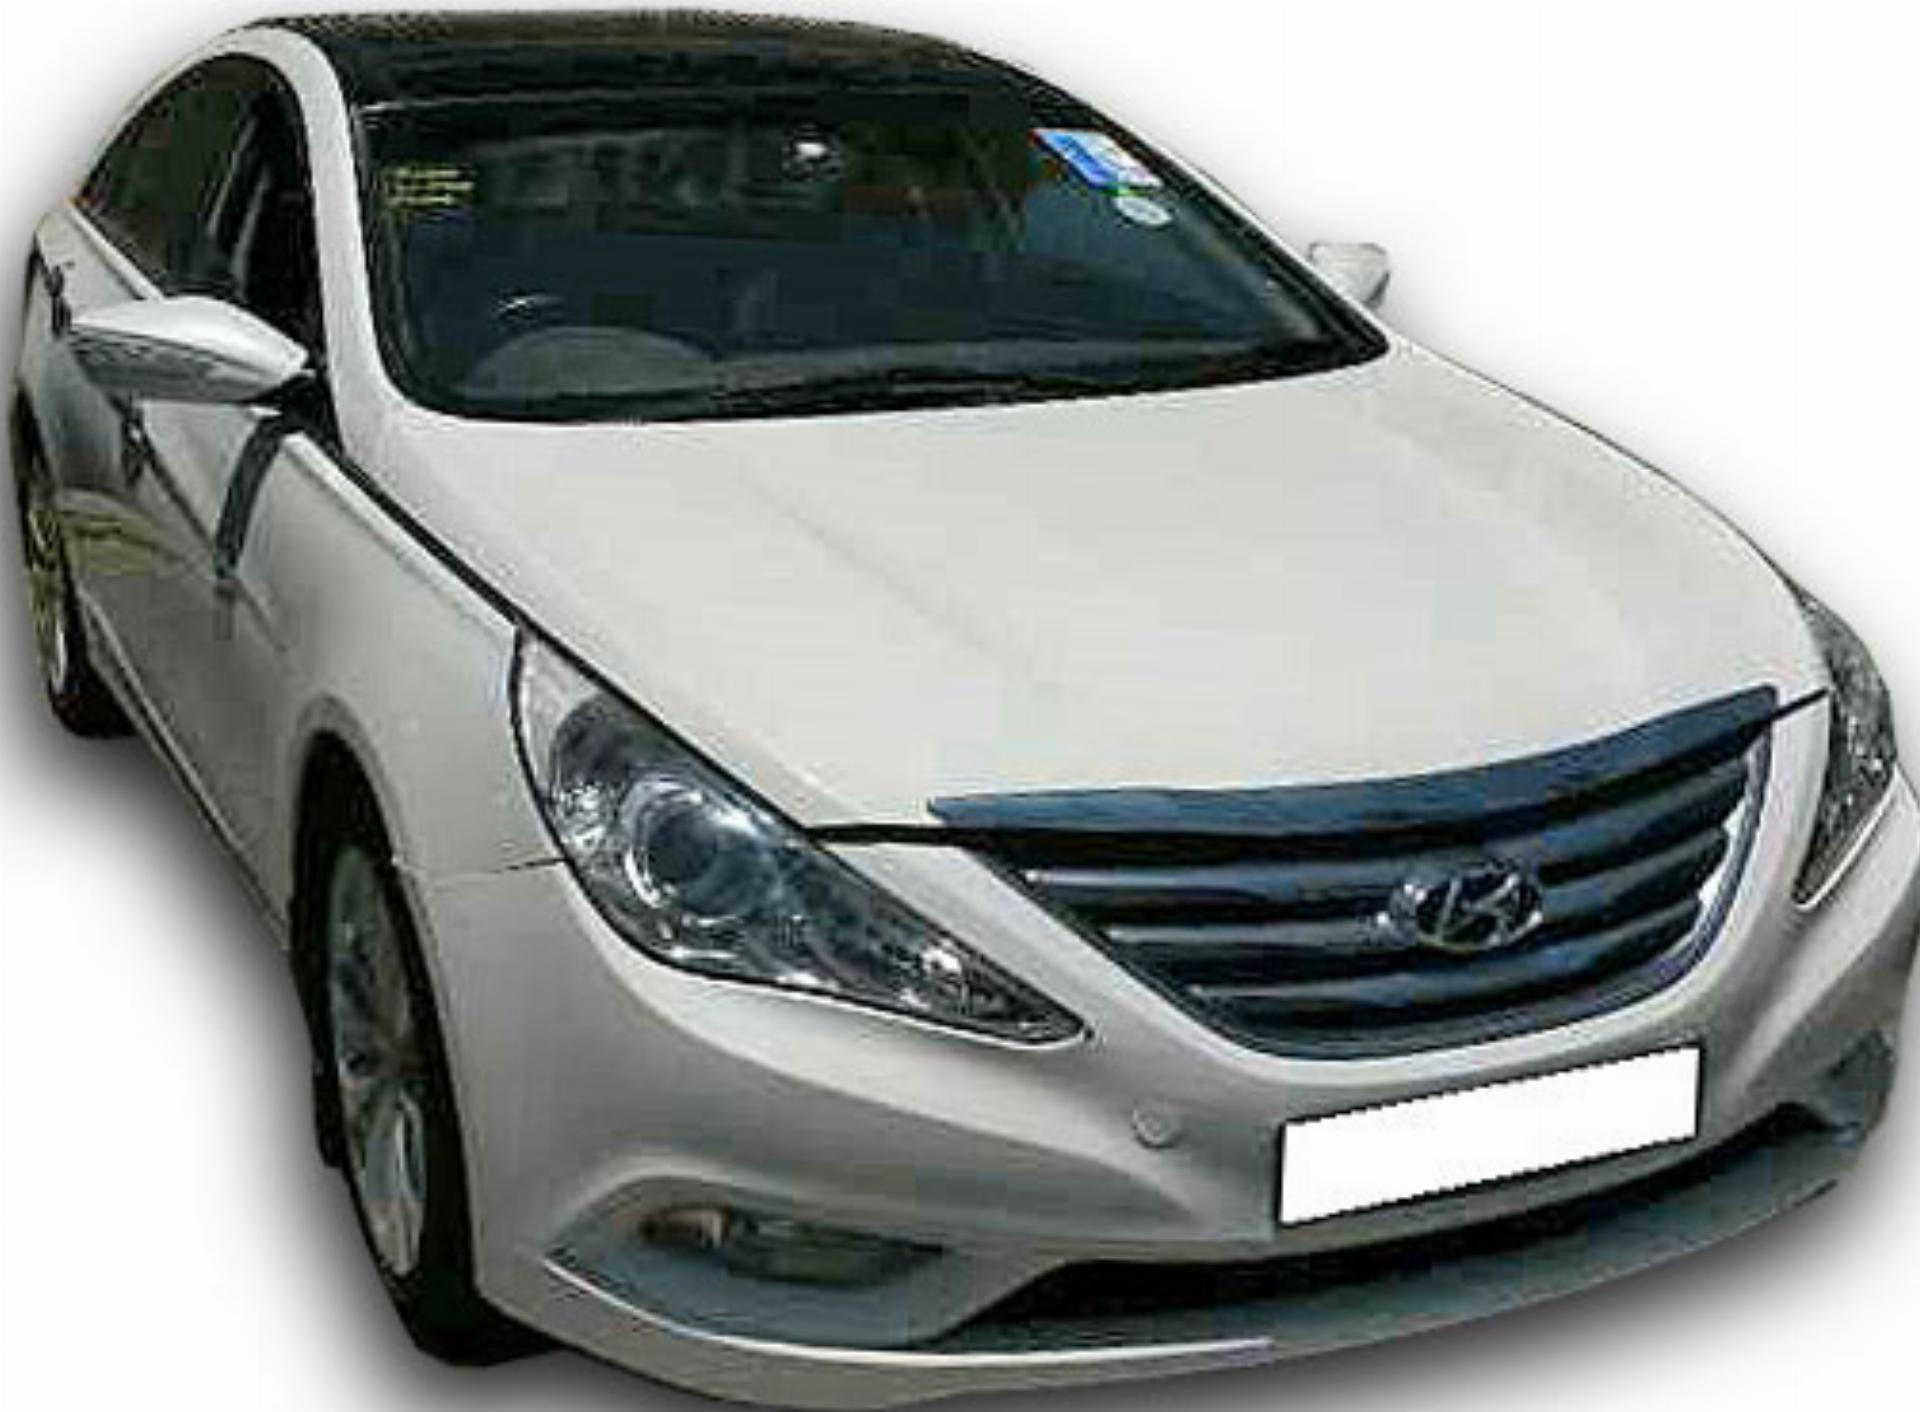 Repossessed Hyundai Sonata 2.4 GLS Executive 2011 on